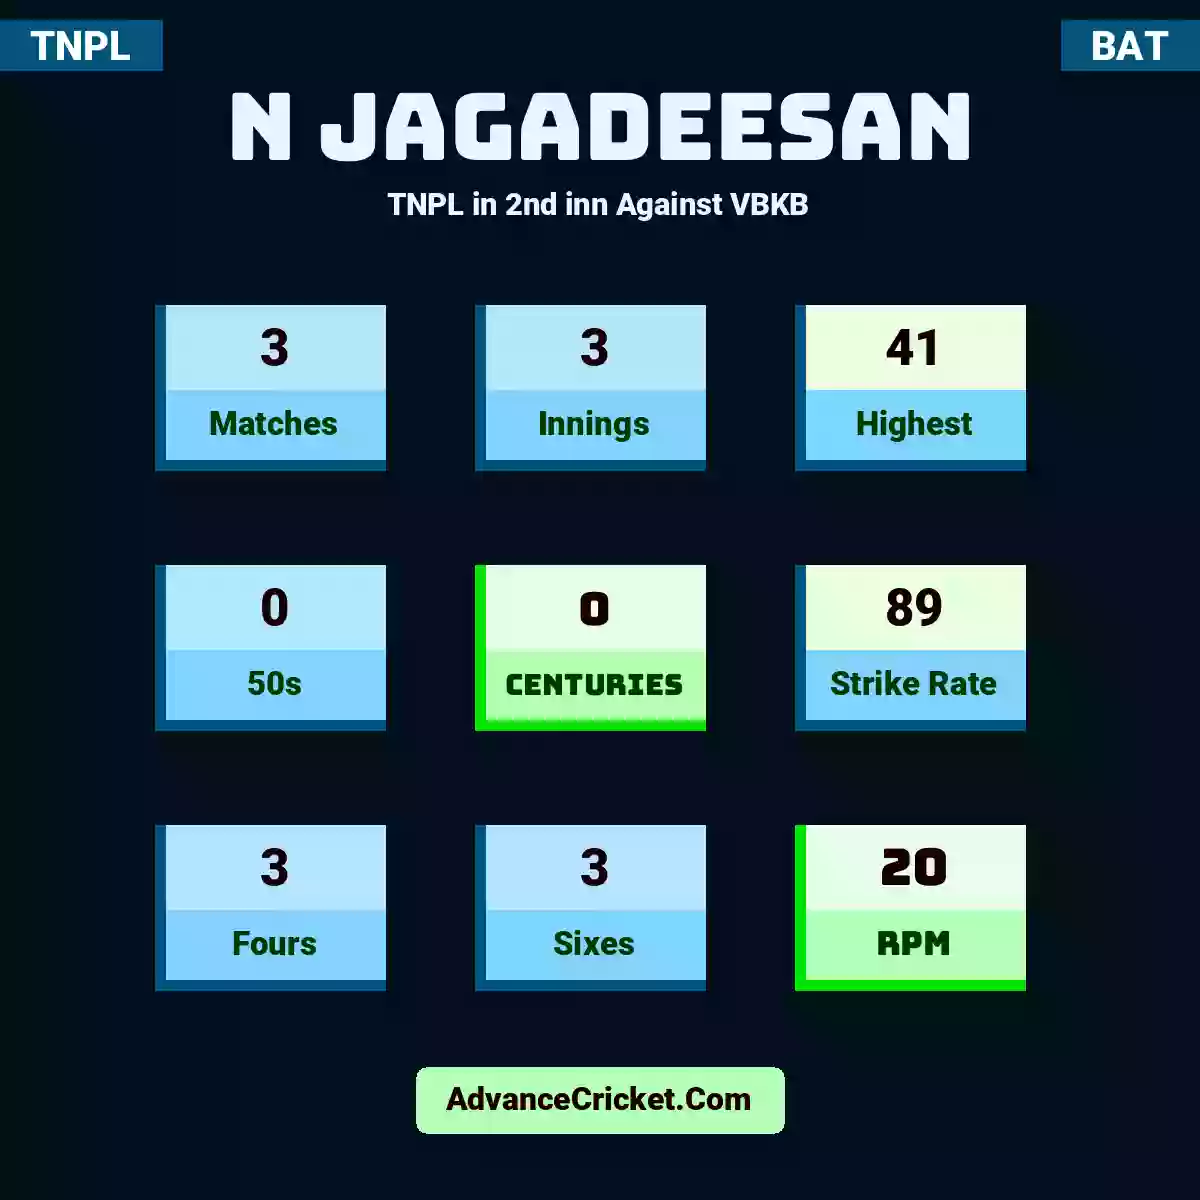 N Jagadeesan TNPL  in 2nd inn Against VBKB, N Jagadeesan played 3 matches, scored 41 runs as highest, 0 half-centuries, and 0 centuries, with a strike rate of 89. N.Jagadeesan hit 3 fours and 3 sixes, with an RPM of 20.